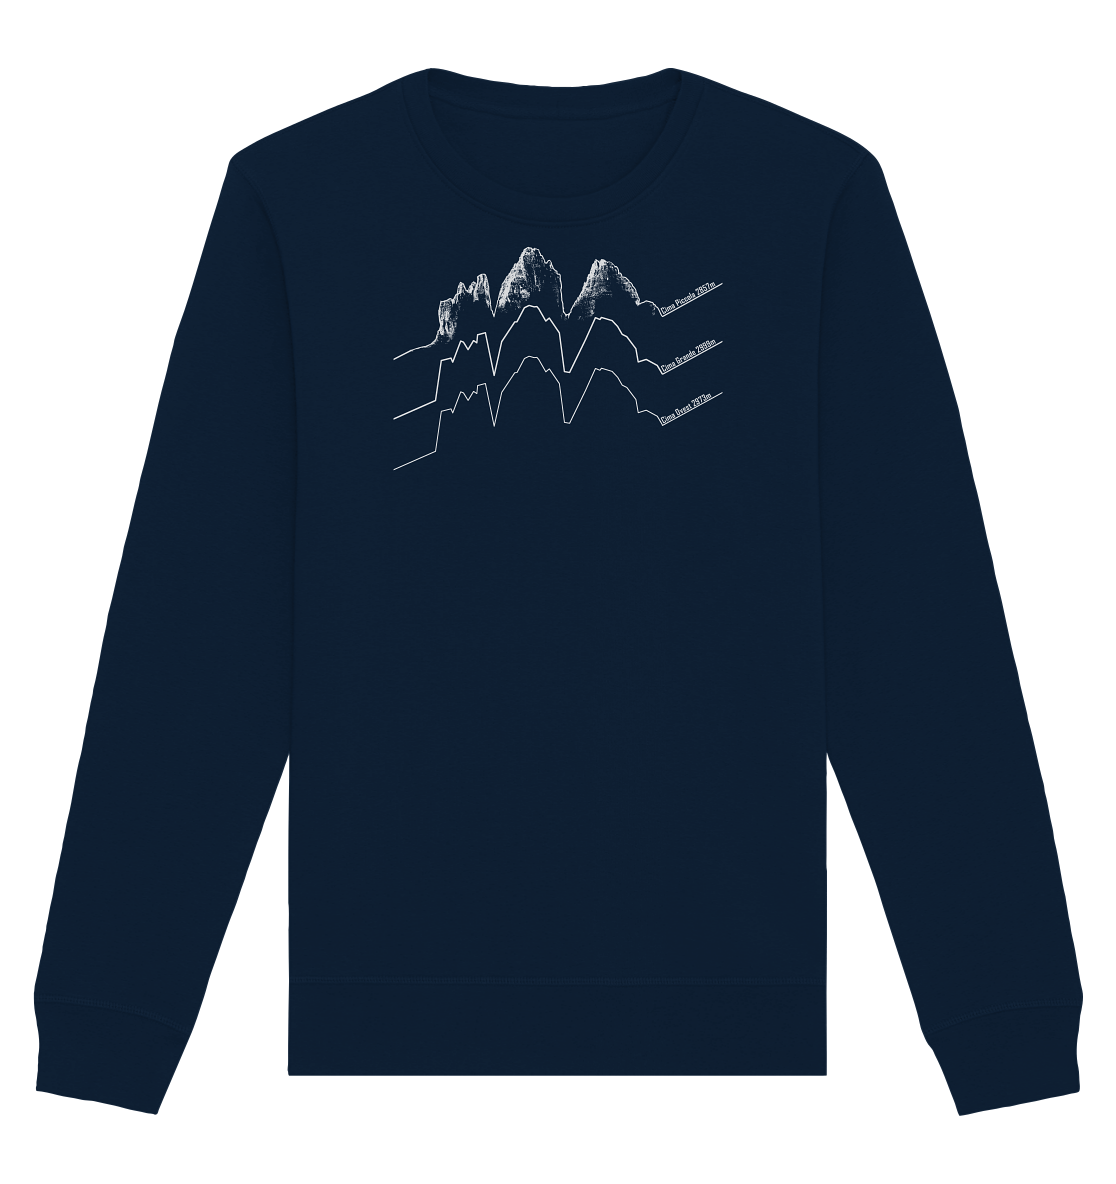 Drei Zinnen  - Organic Basic Unisex Sweatshirt